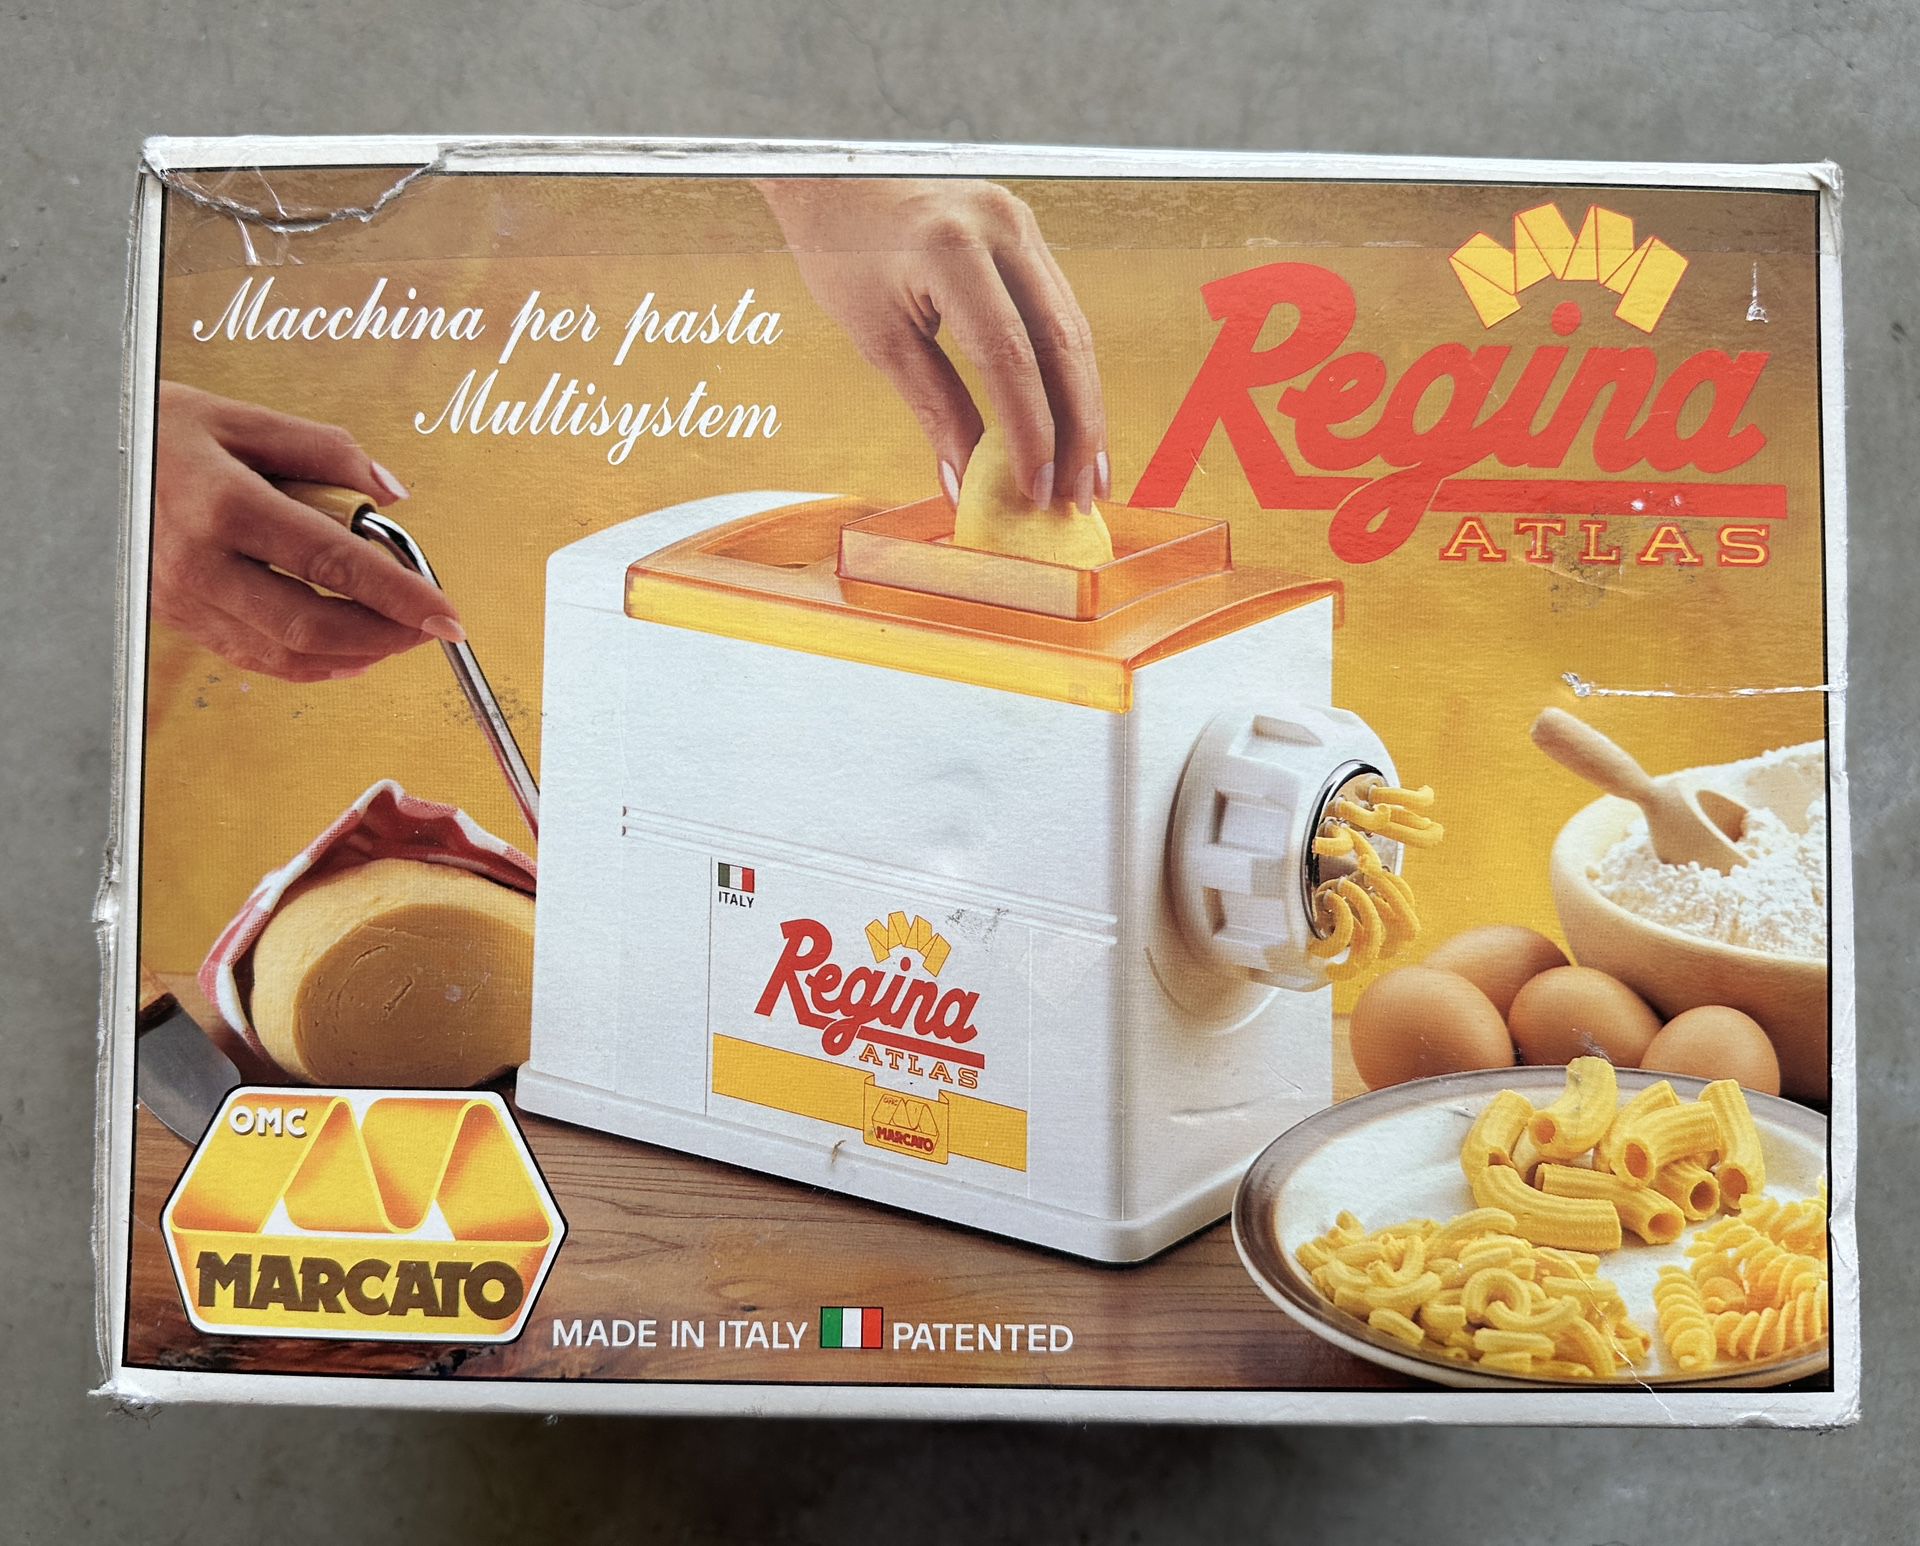 Regina Atlas By Marcato Manual Pasta Maker Machine Made In Italy